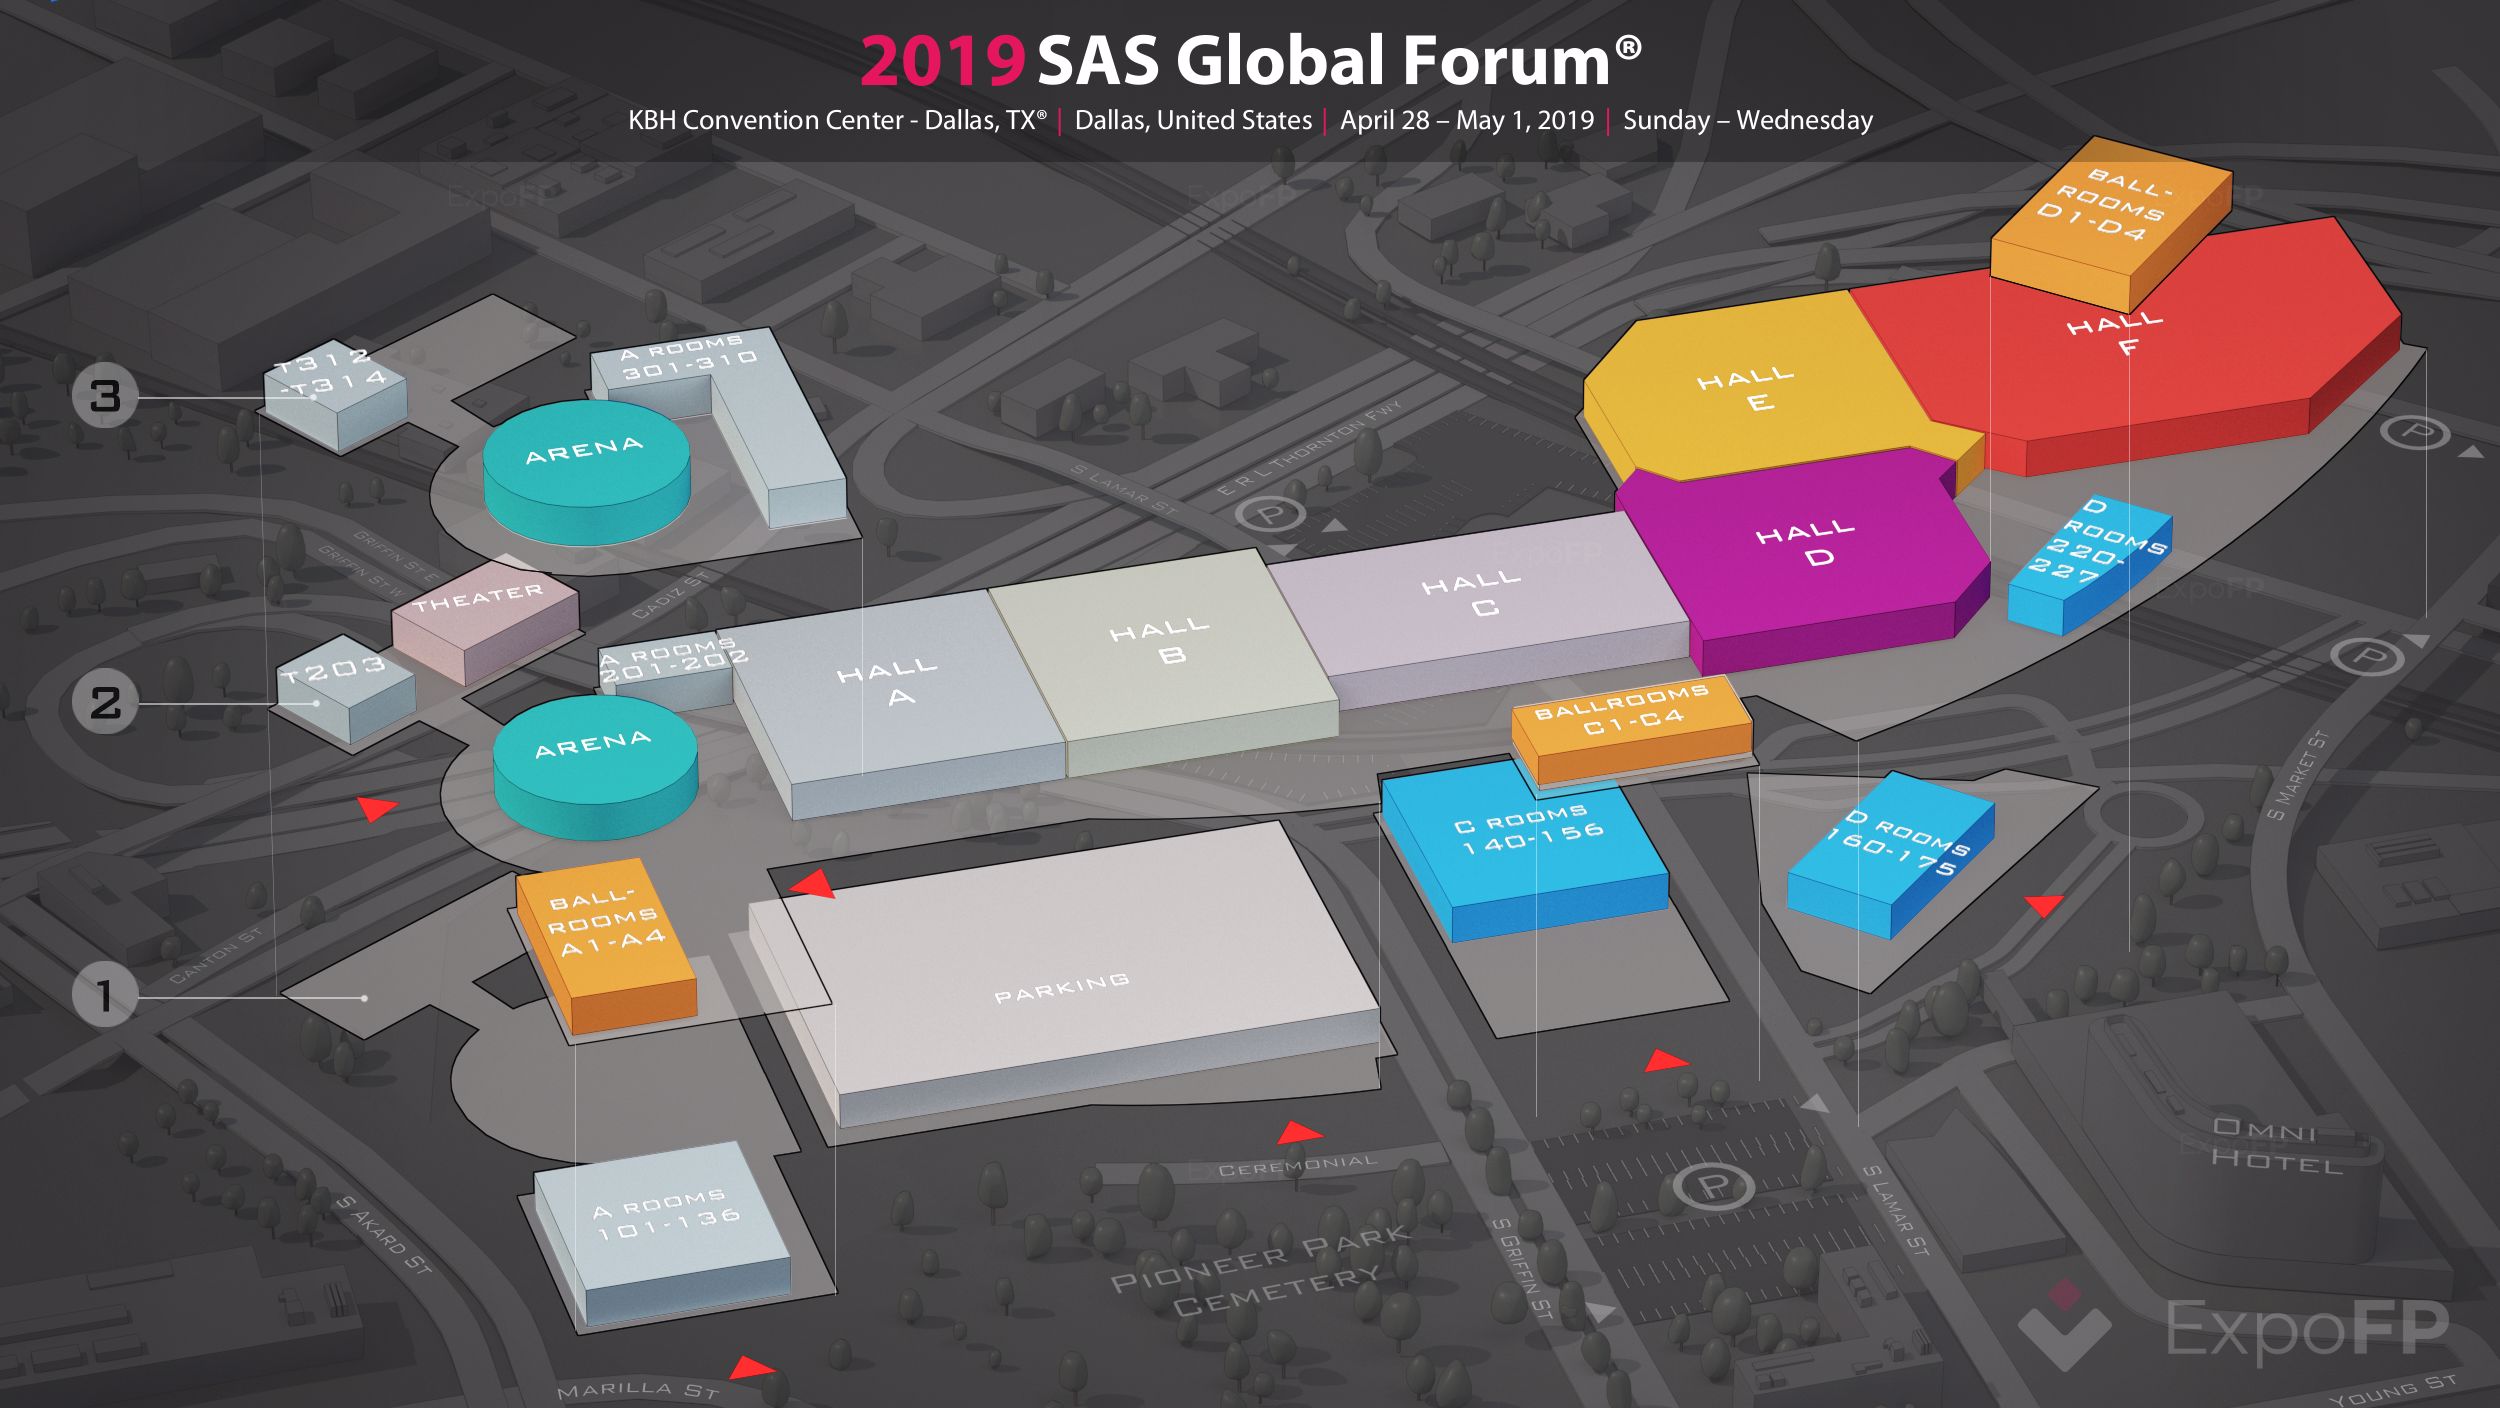 SAS Global Forum 2019 in KBH Convention Center Dallas, TX